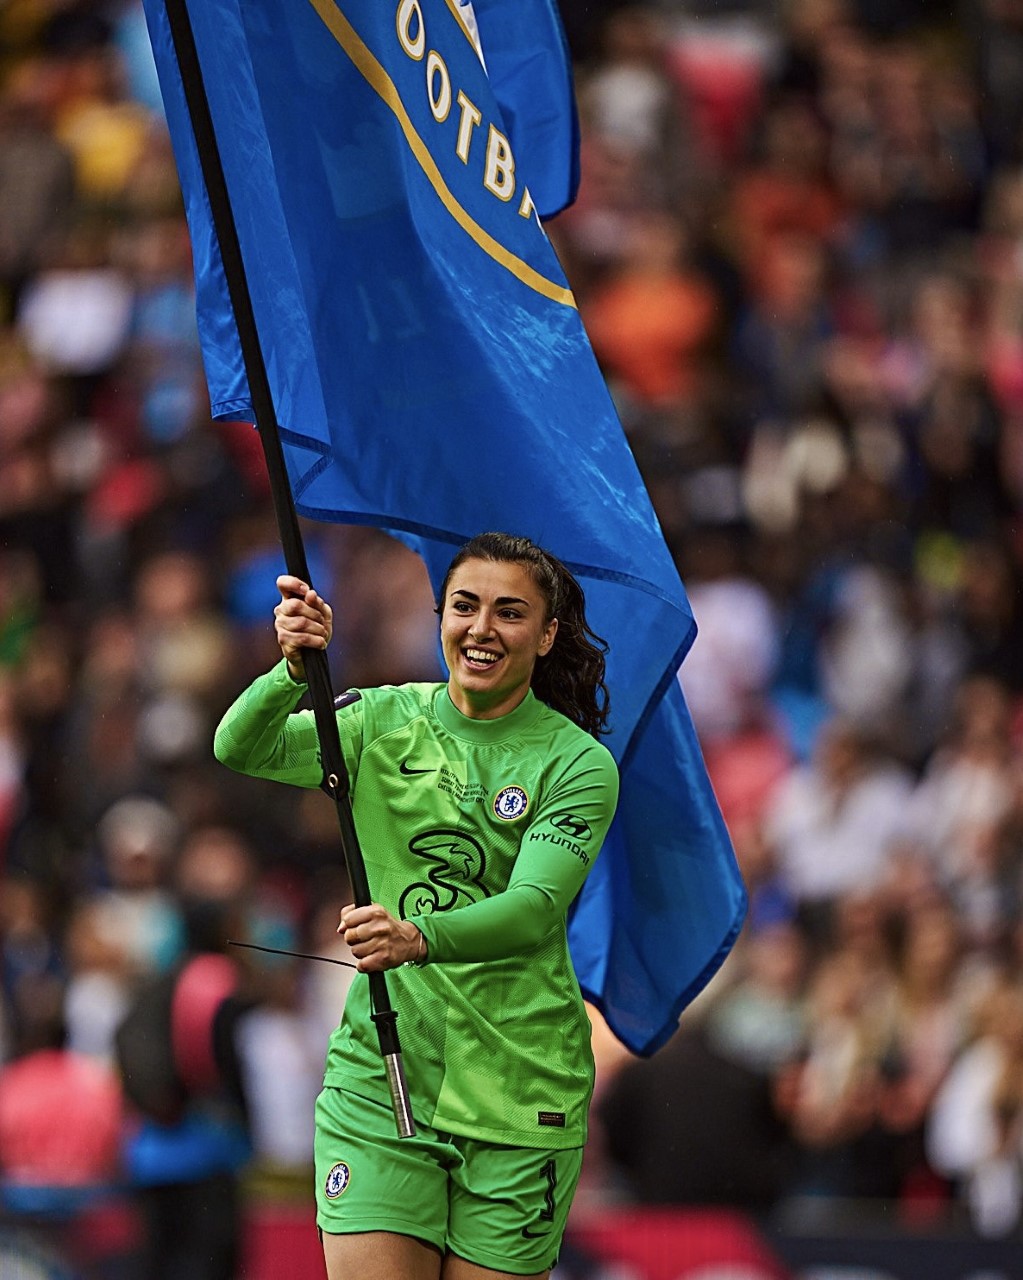 Målvakten Zecira Musovic med en stor flagga på en arena